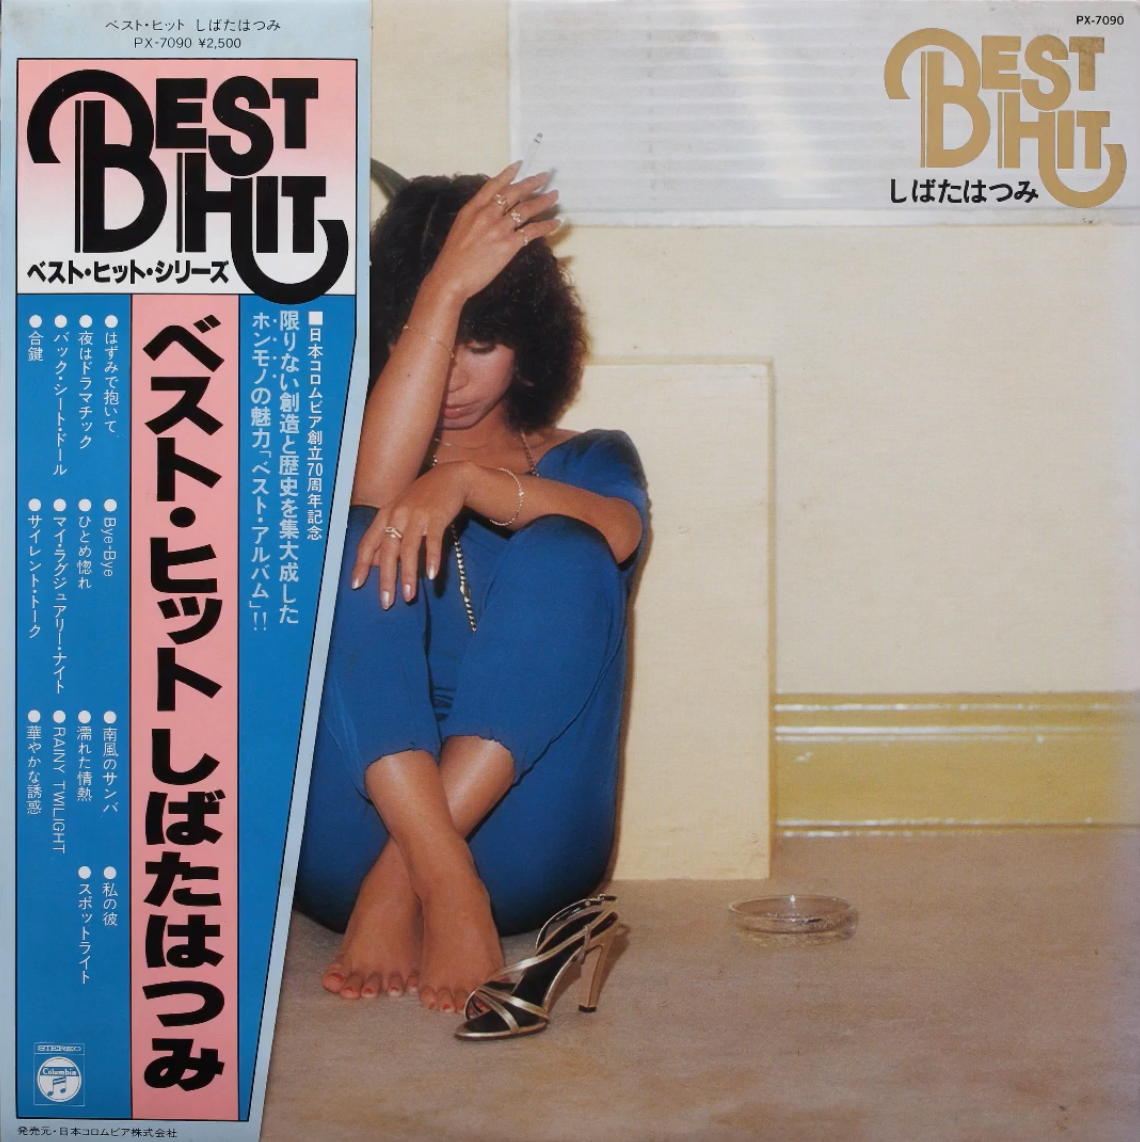 Hatsumi Shibata & Hang Over - Best Hit